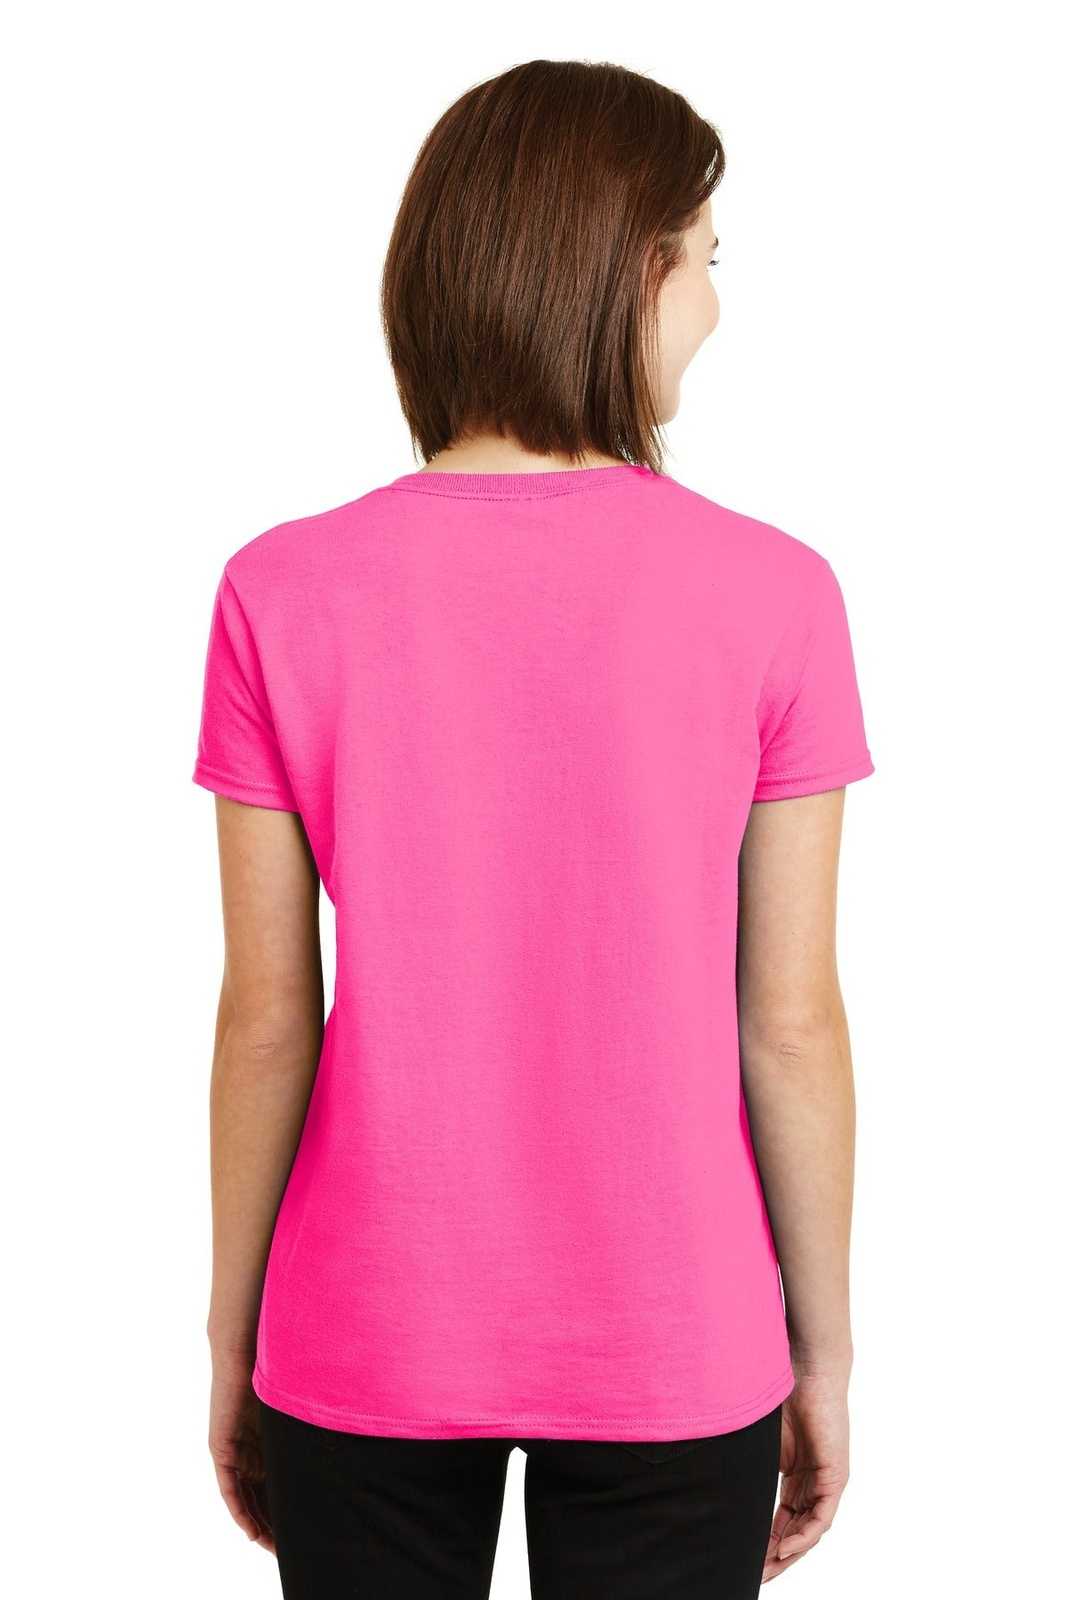 Gildan 2000L Ladies Ultra Cotton 100% Cotton T-Shirt - Safety Pink - HIT a Double